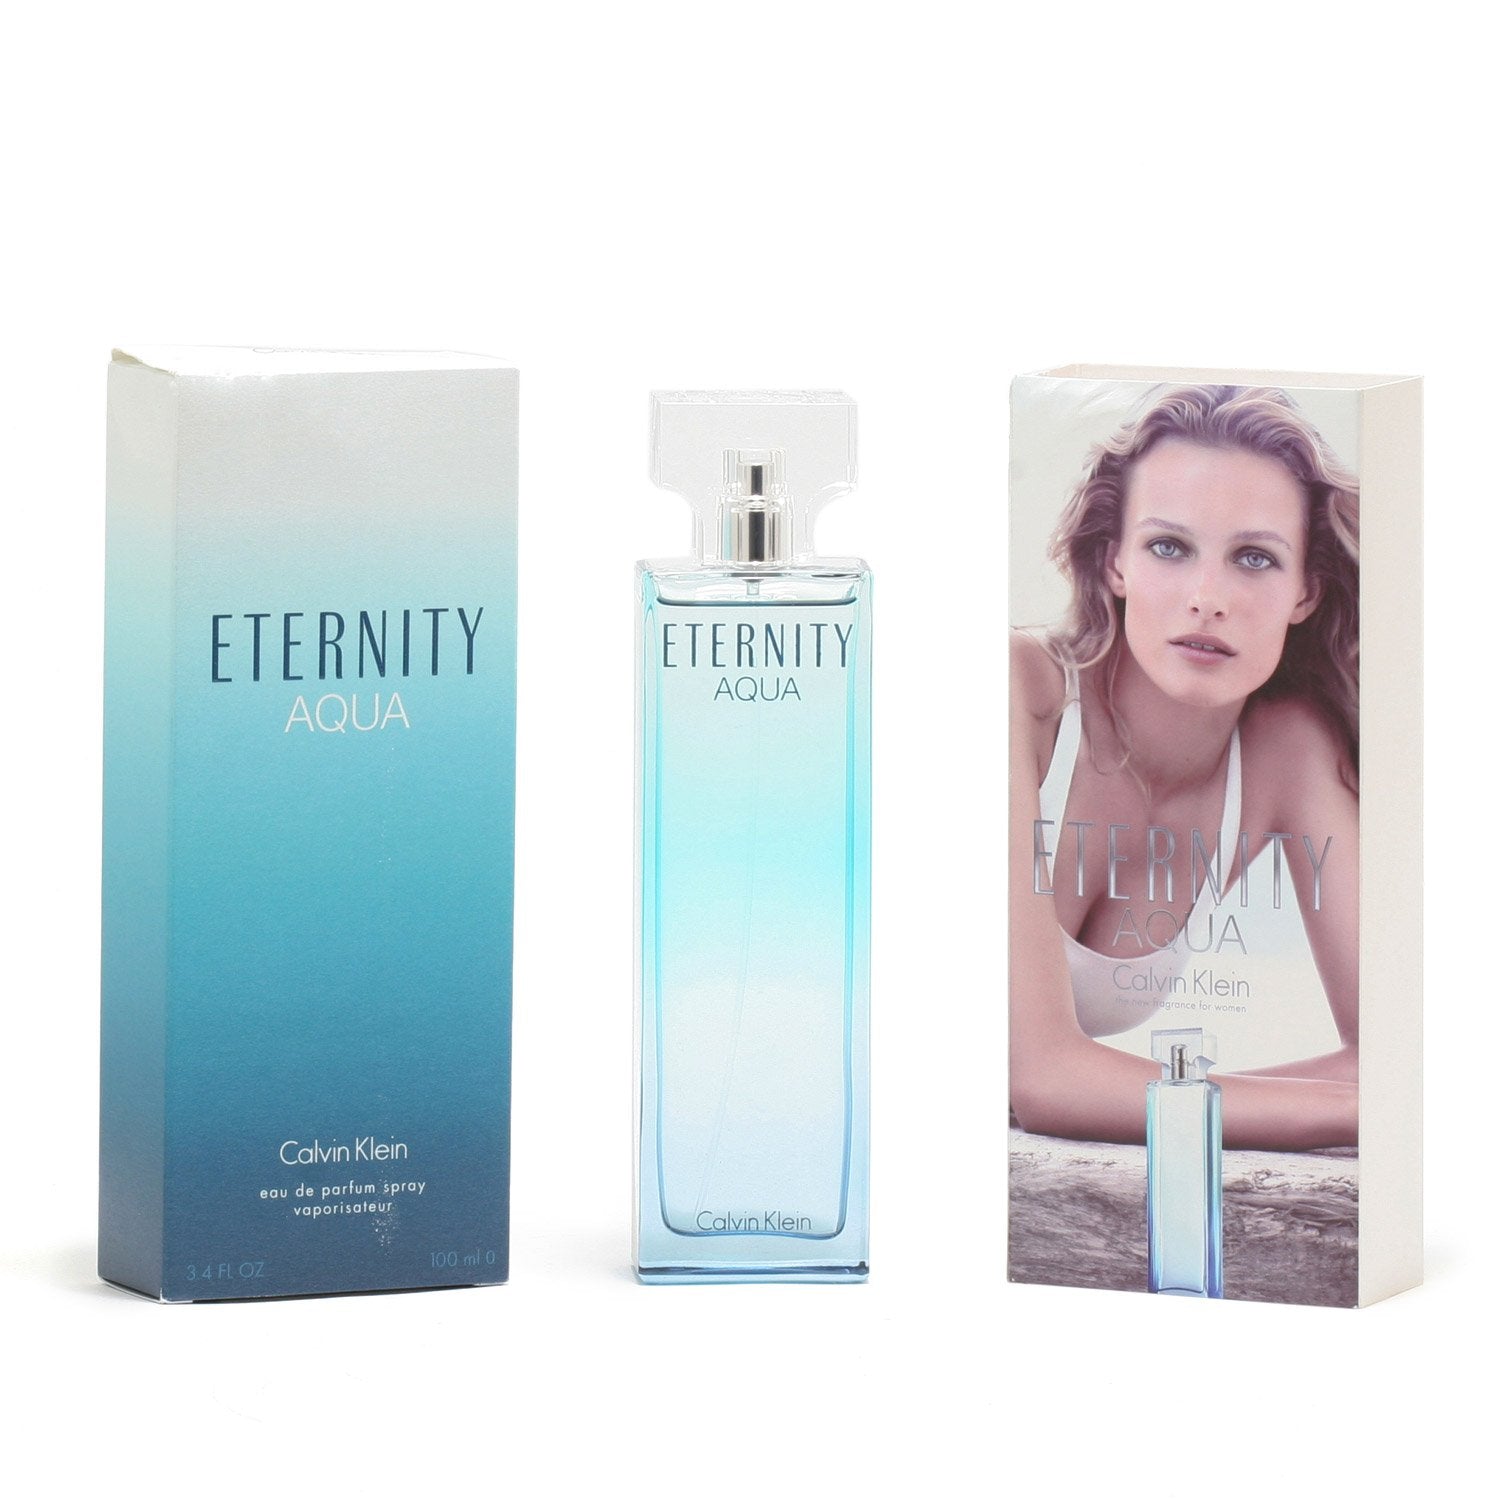 Perfume - ETERNITY AQUA FOR WOMEN BY CALVIN KLEIN - EAU DE PARFUM SPRAY, 3.4 OZ